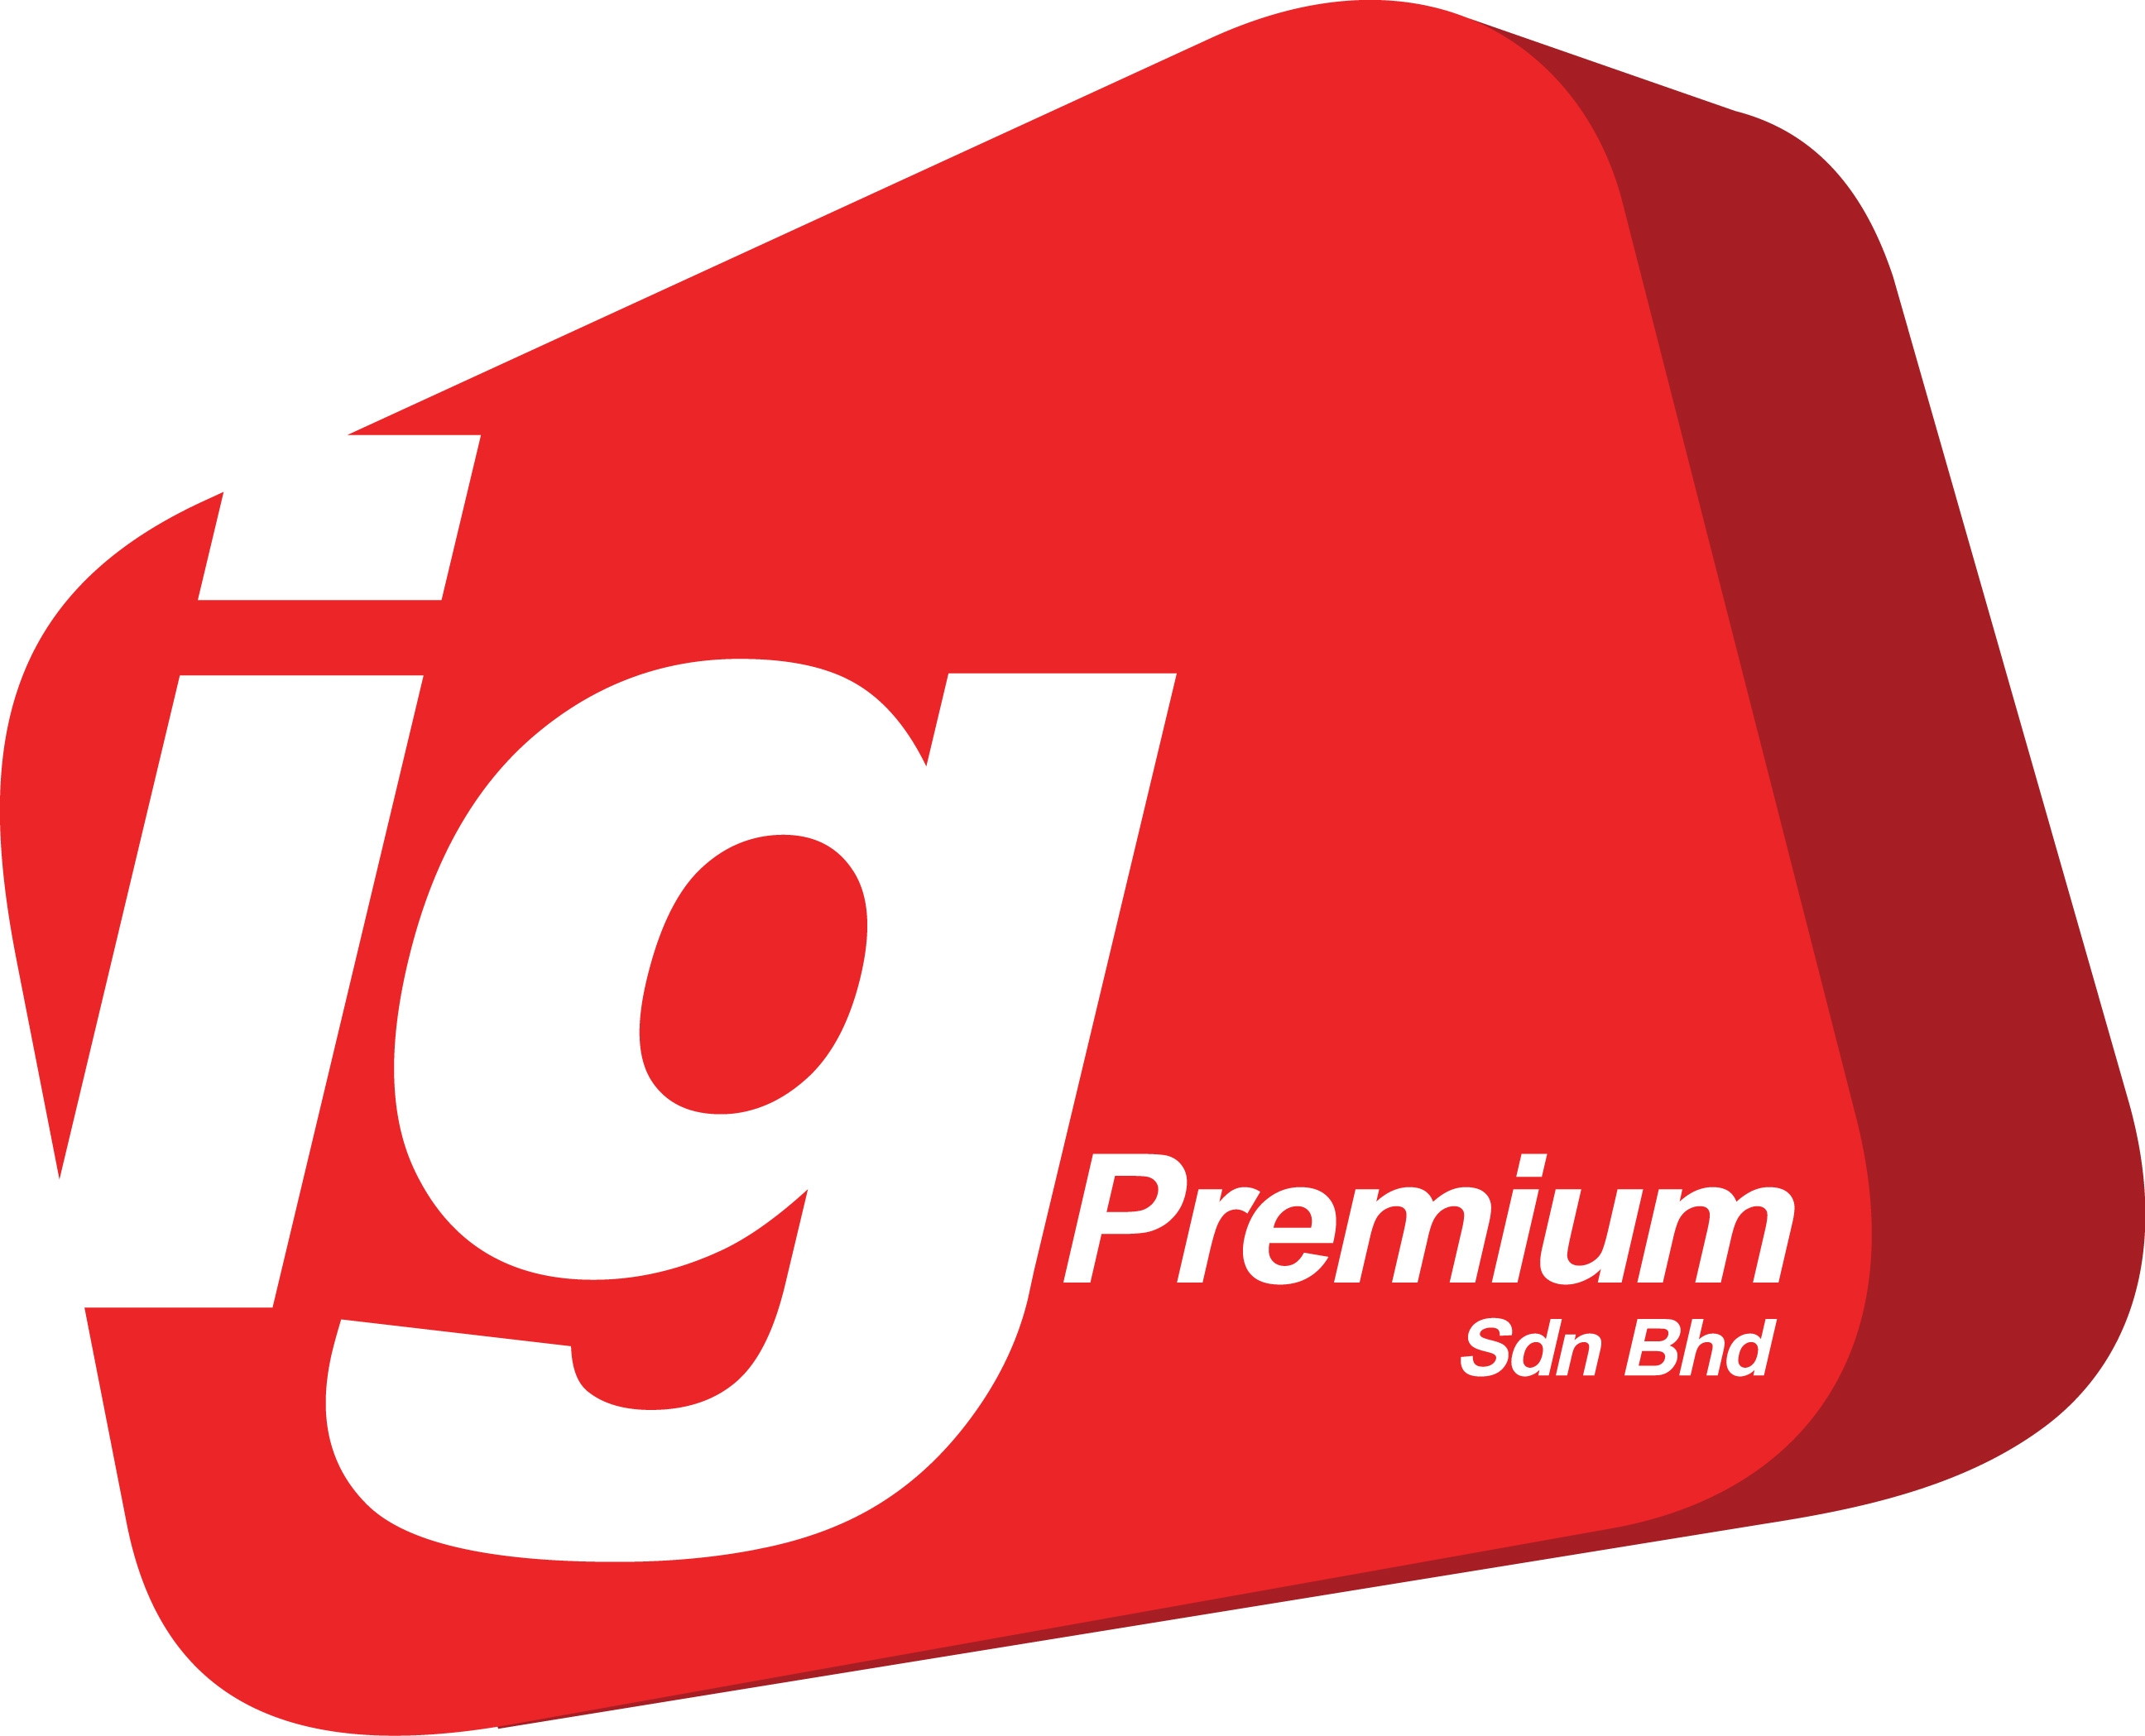 IG Premium Sdn Bhd